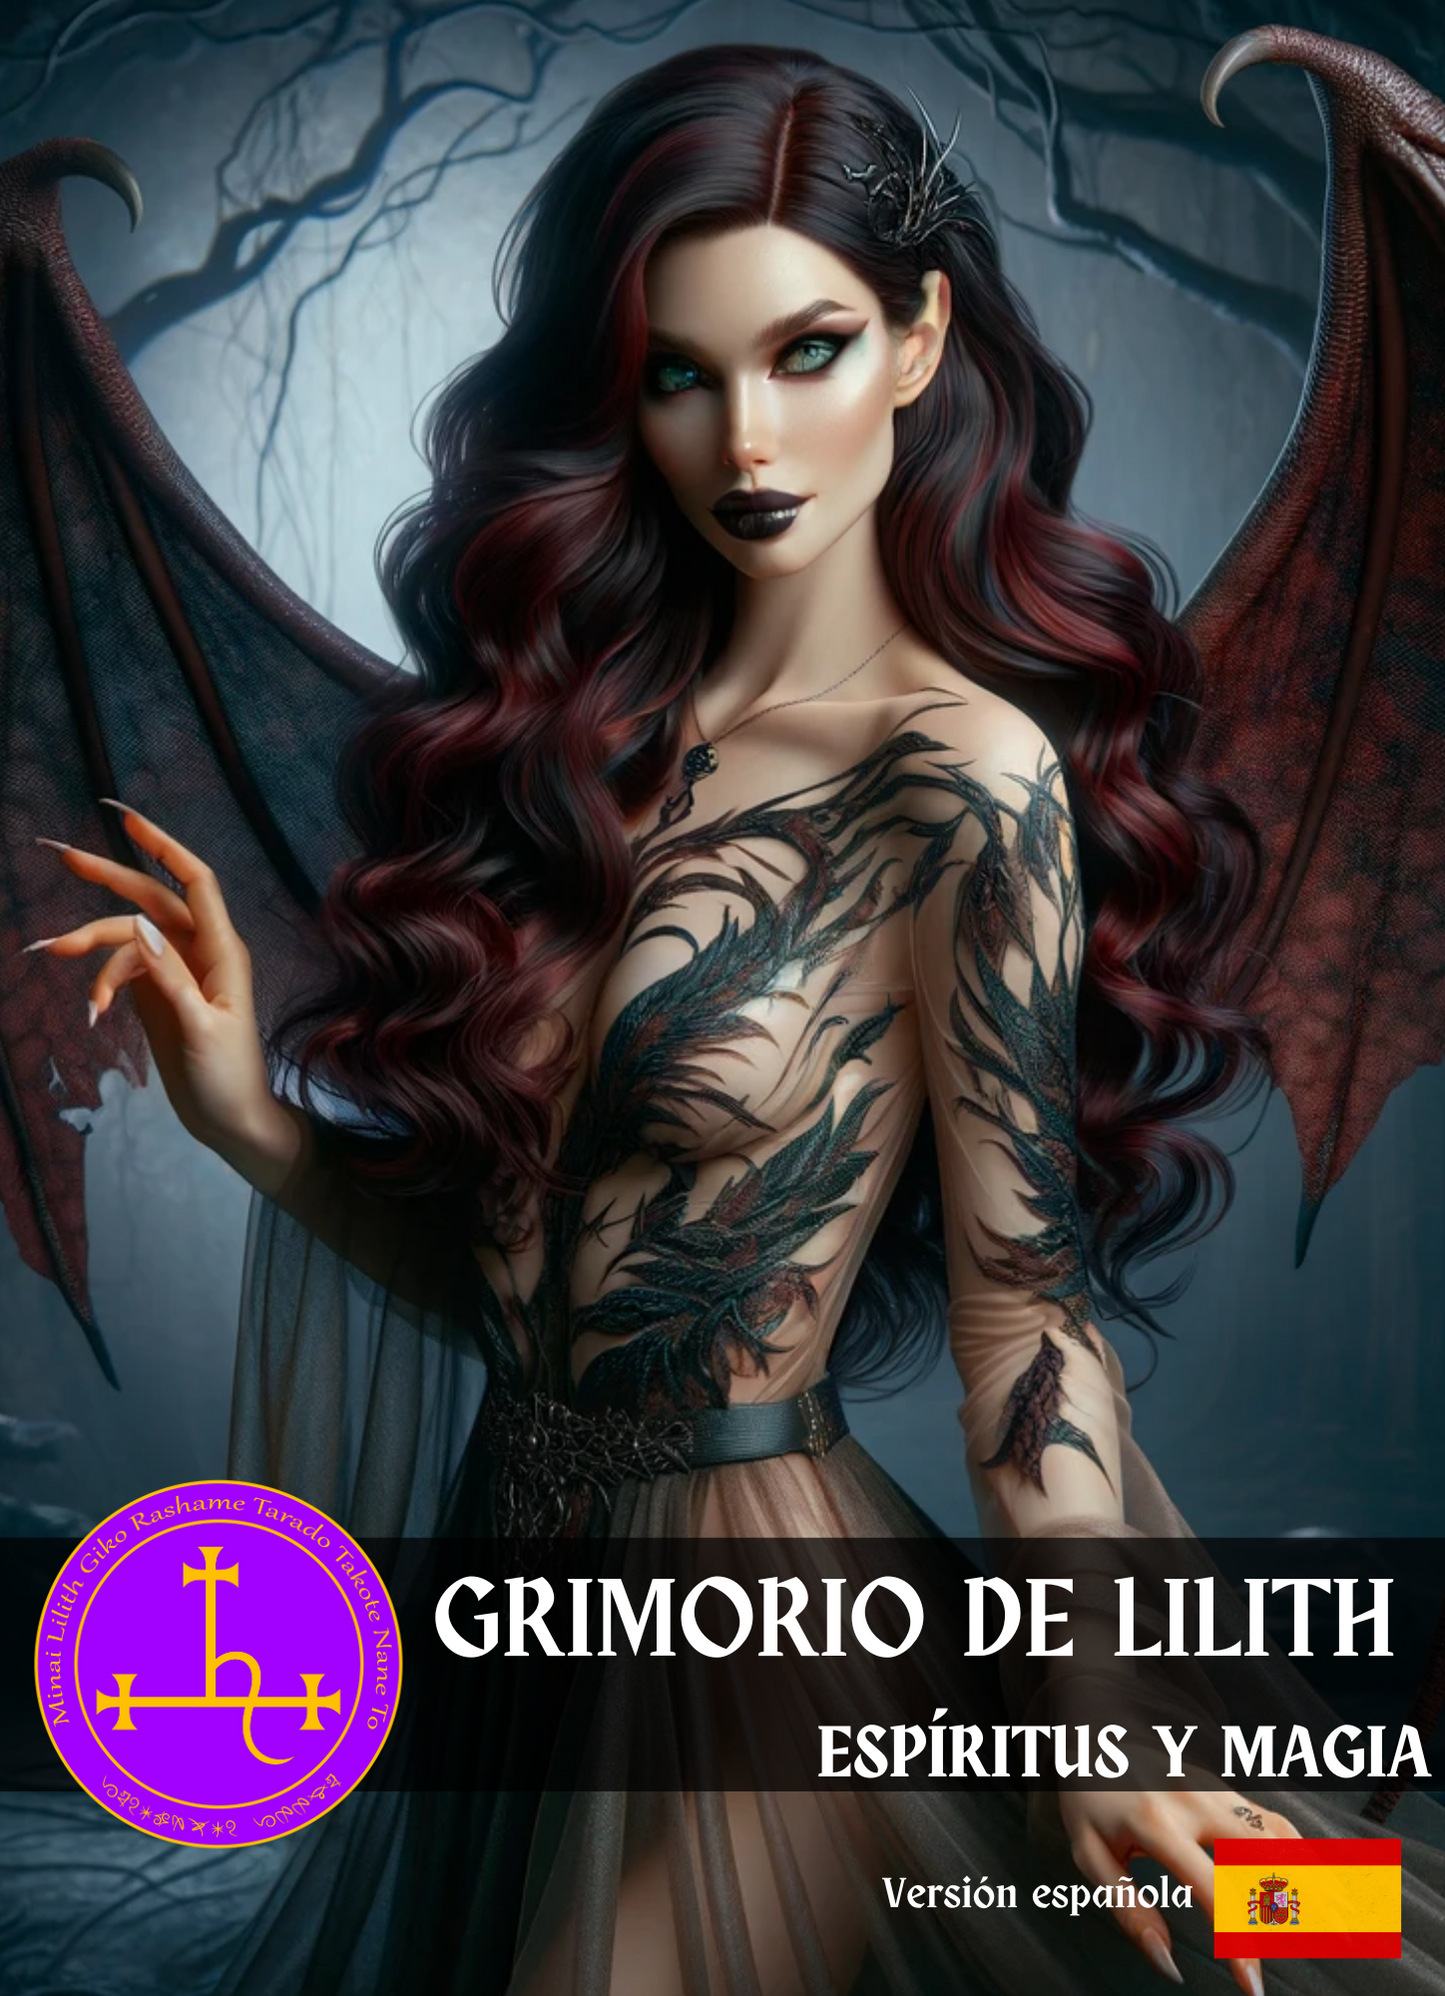 Grimoire van Lilith Spele en rituele vir sukses, respek en oproep Succubus & Incubus - Abraxas Amulets ® Magic ♾️ Talismans ♾️ Inisiasies